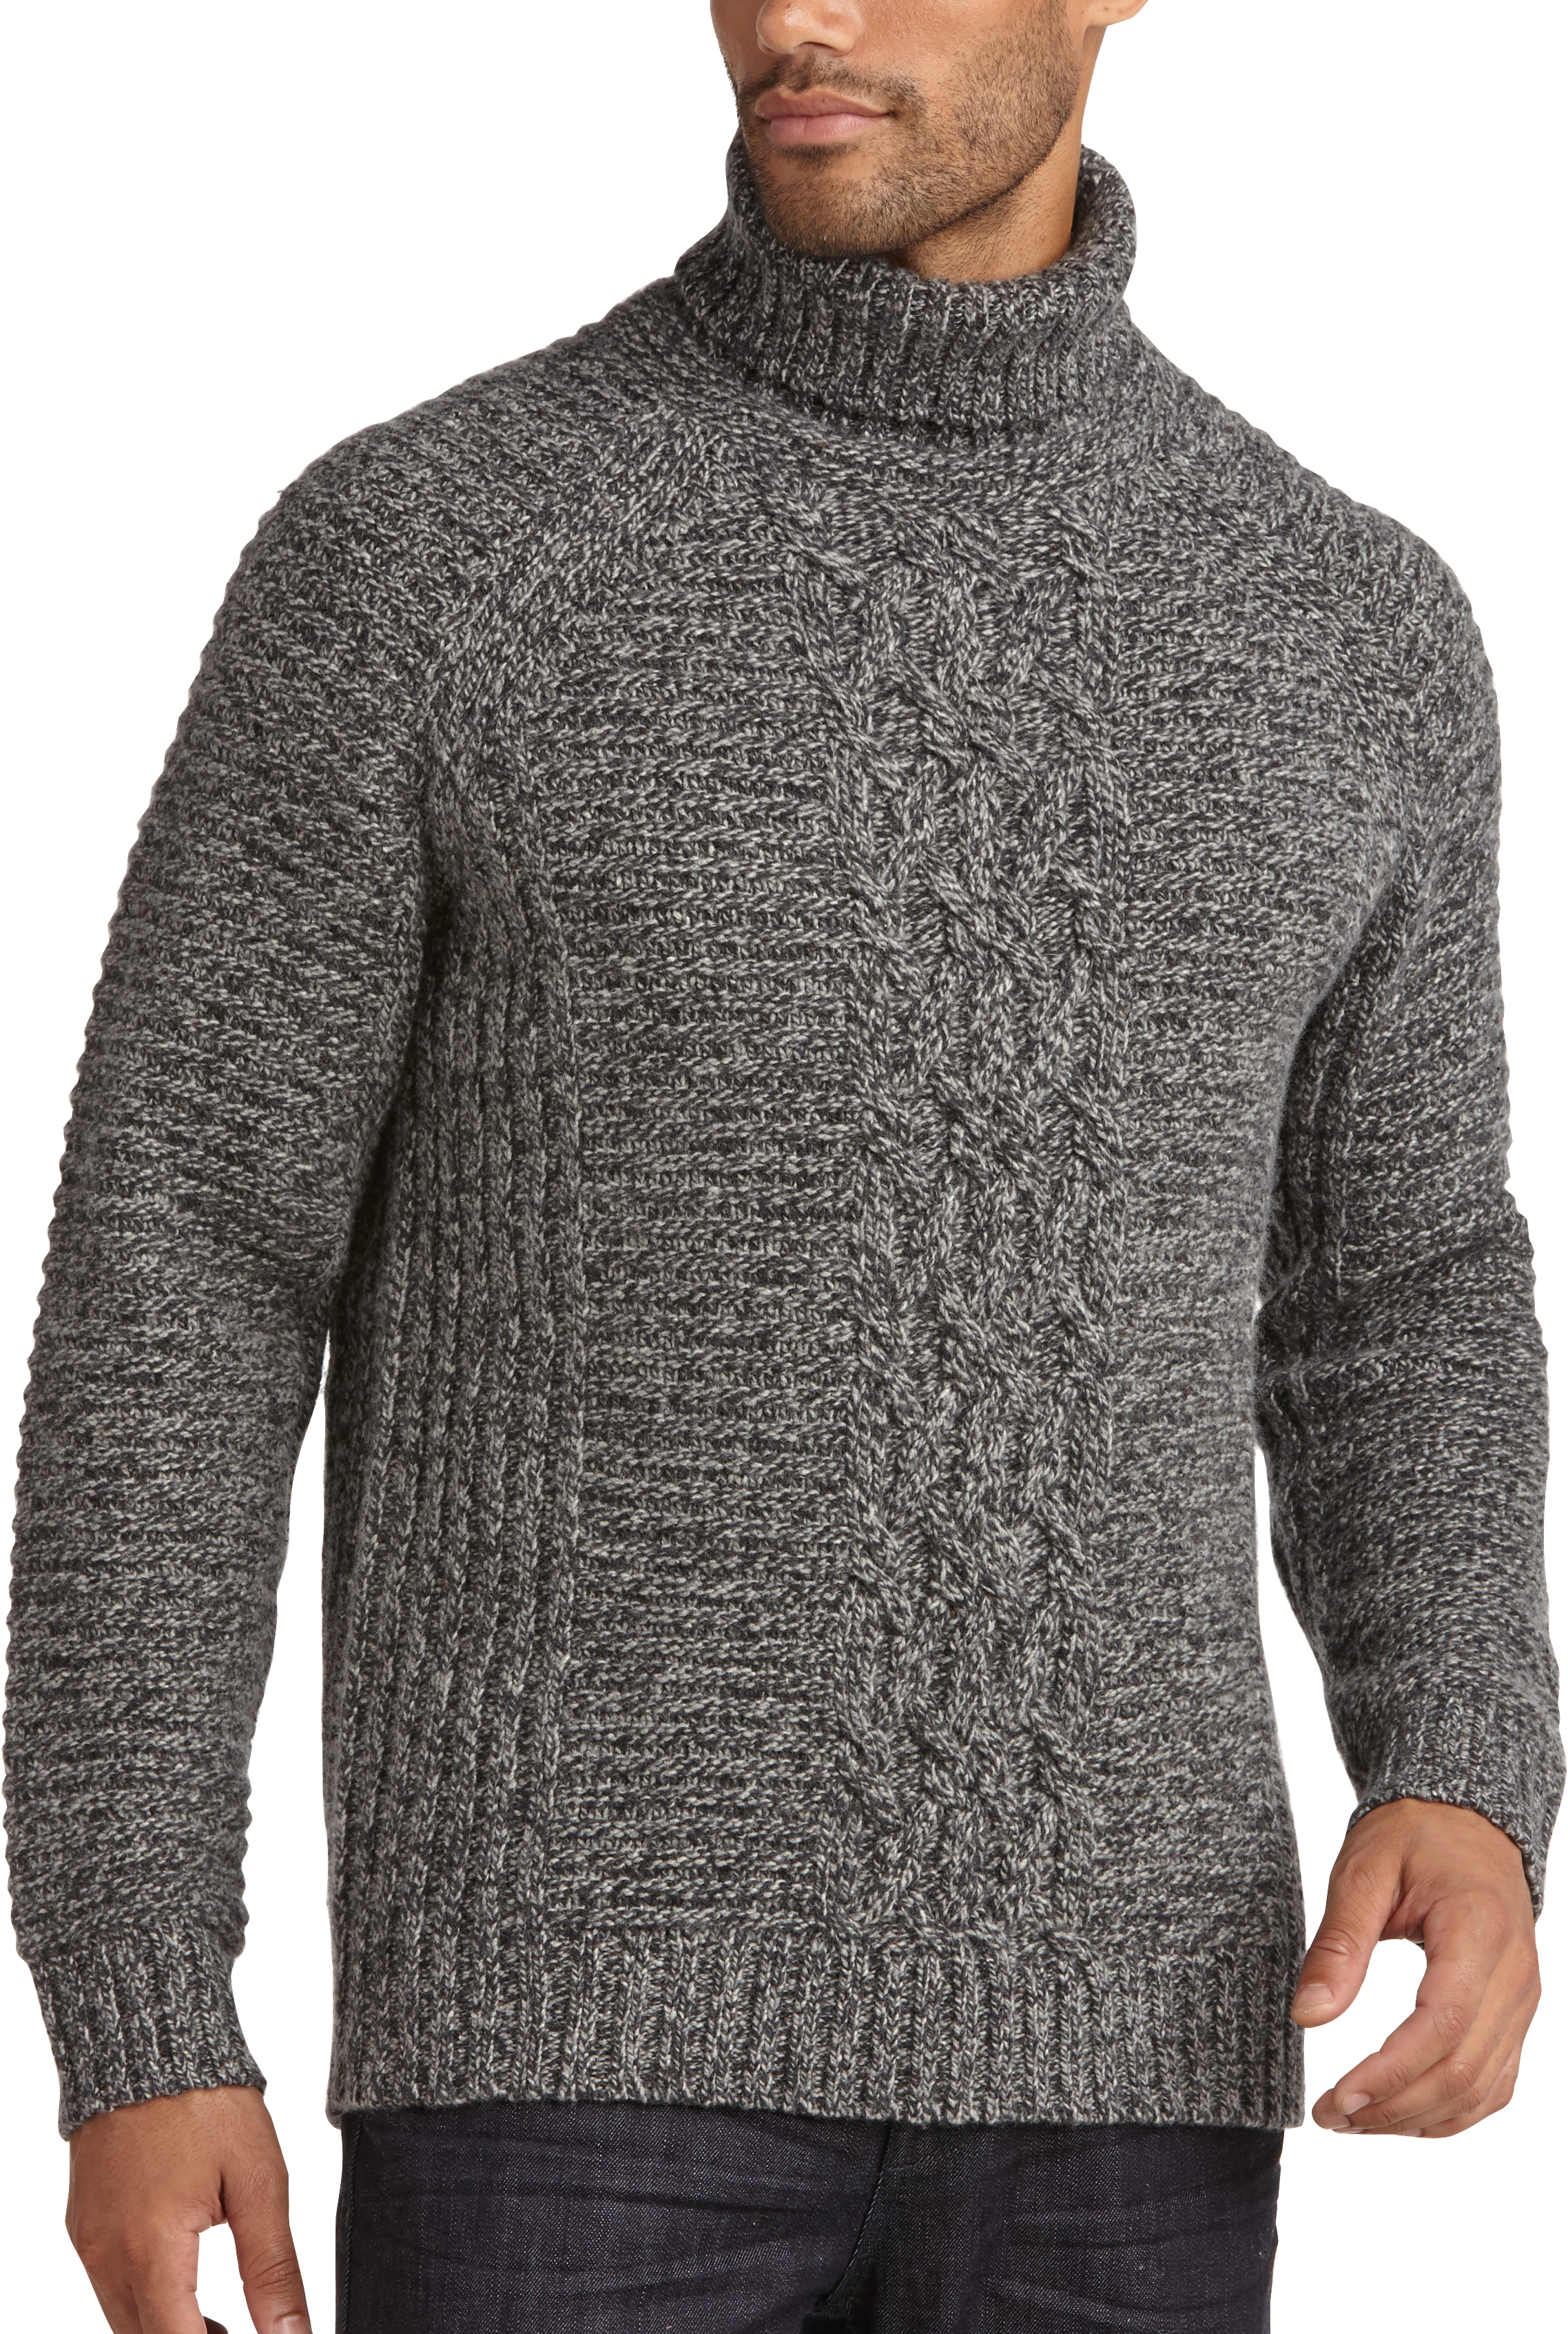 Joseph Abboud Gray Modern Fit Turtleneck Sweater - Men's Sale | Men's ...